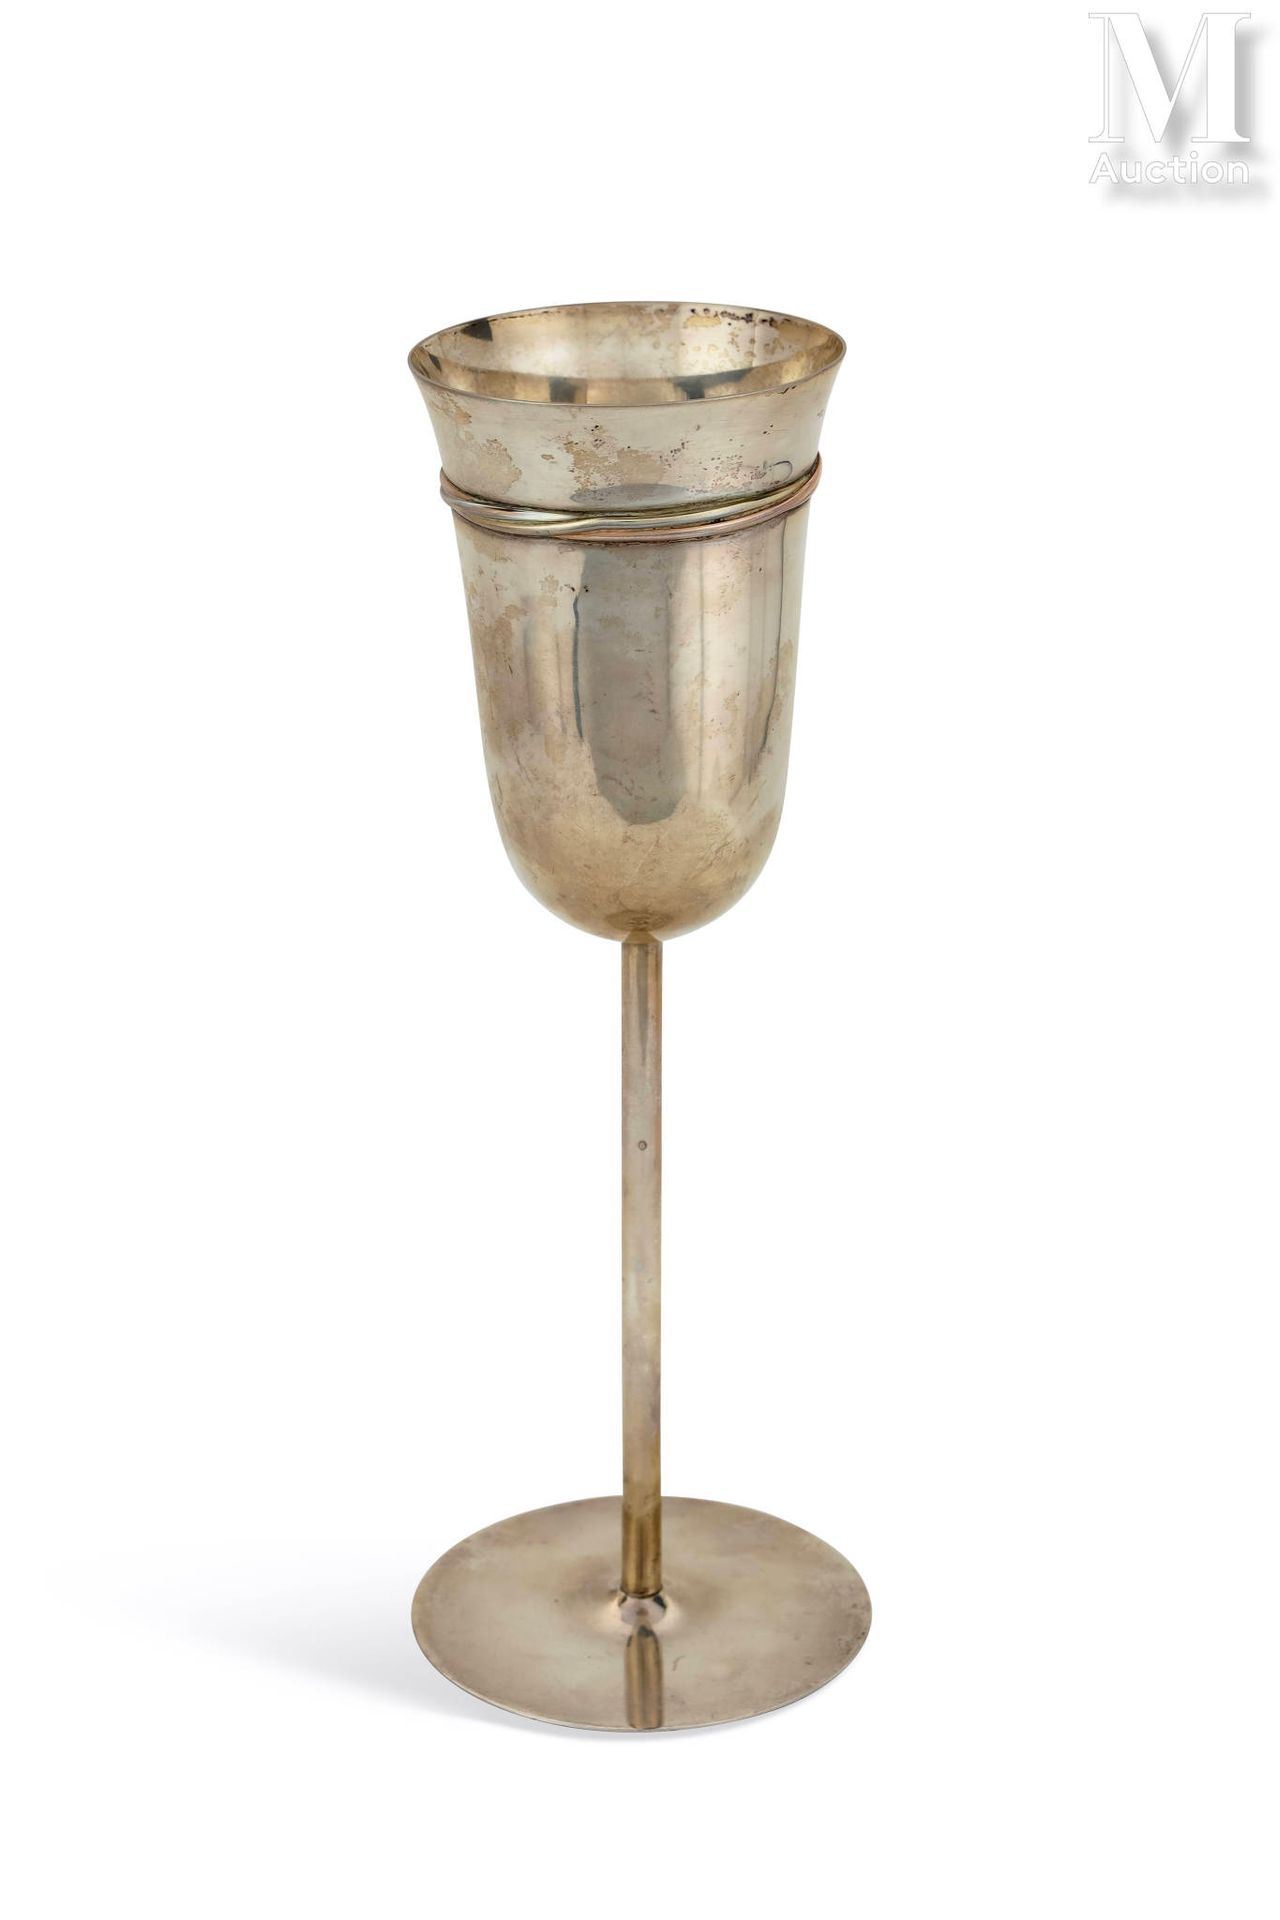 CARTIER Paris 有柄玻璃杯
或银色香槟杯，装饰有三个不同颜色的交错圆环，杯柄位于圆盘形底座上。
三位一体款
银质印记 925（925°/°°）和卡地&hellip;